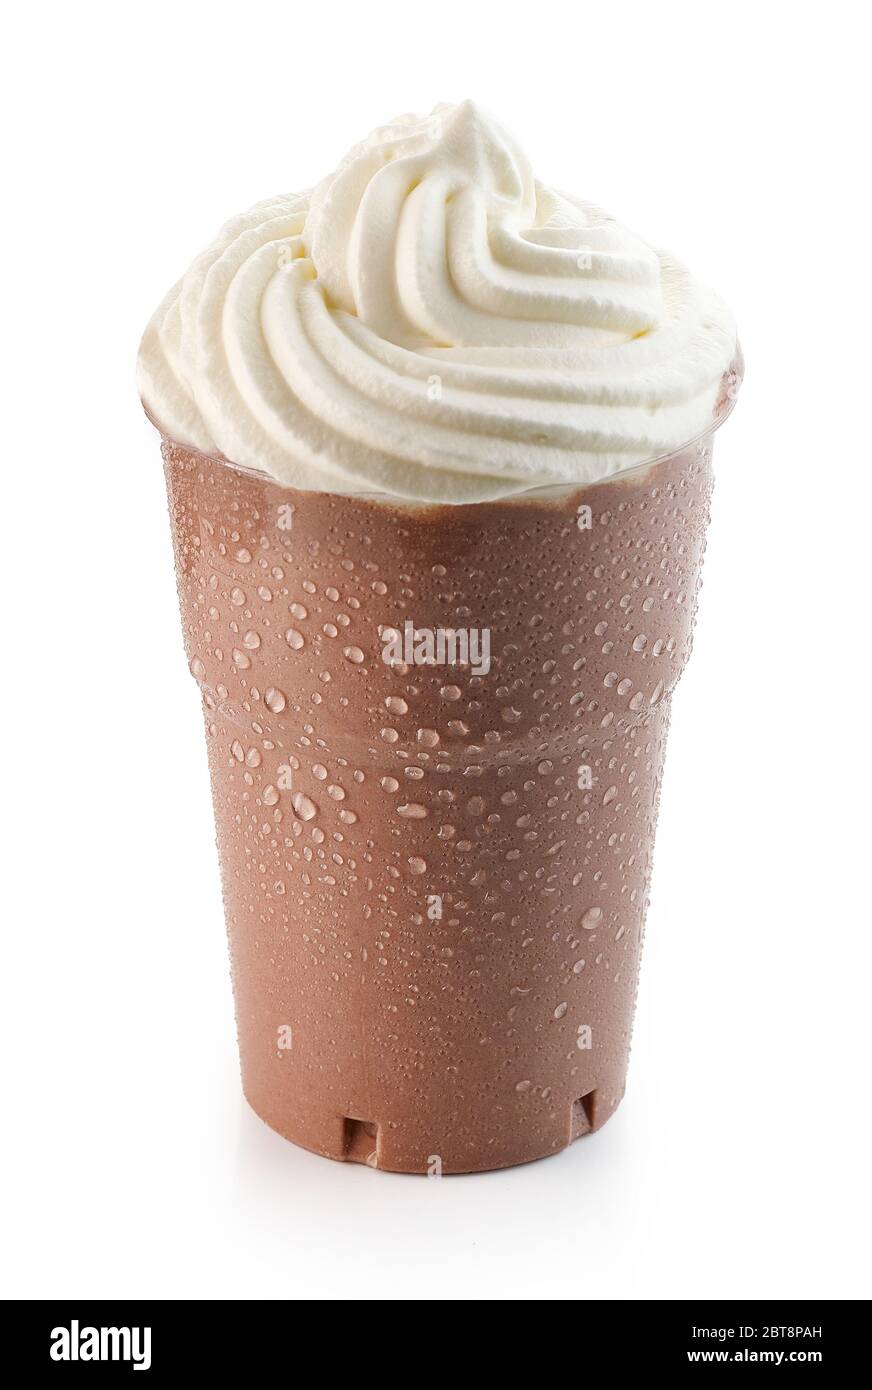 https://c8.alamy.com/comp/2BT8PAH/brown-chocolate-milkshake-in-plastic-take-away-cup-isolated-on-white-background-2BT8PAH.jpg